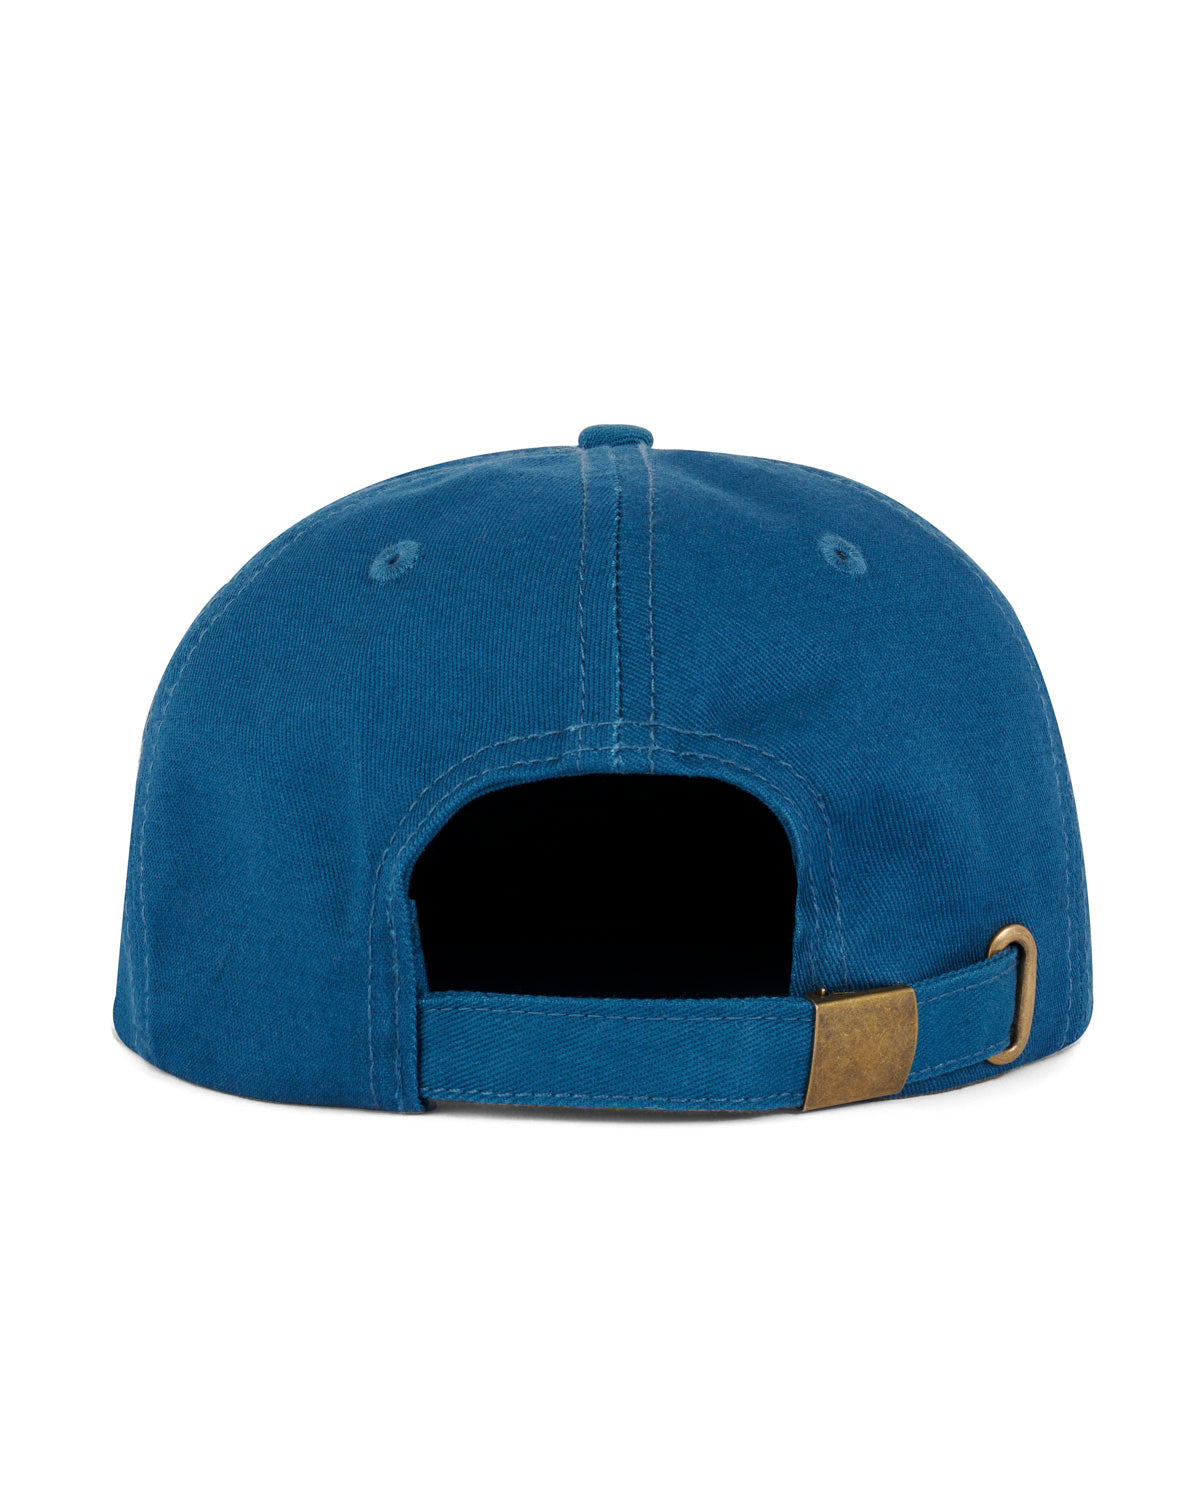 Supreme Vampire 6-Panel Cap Blue Adjustable One Size F/W 18 Hat